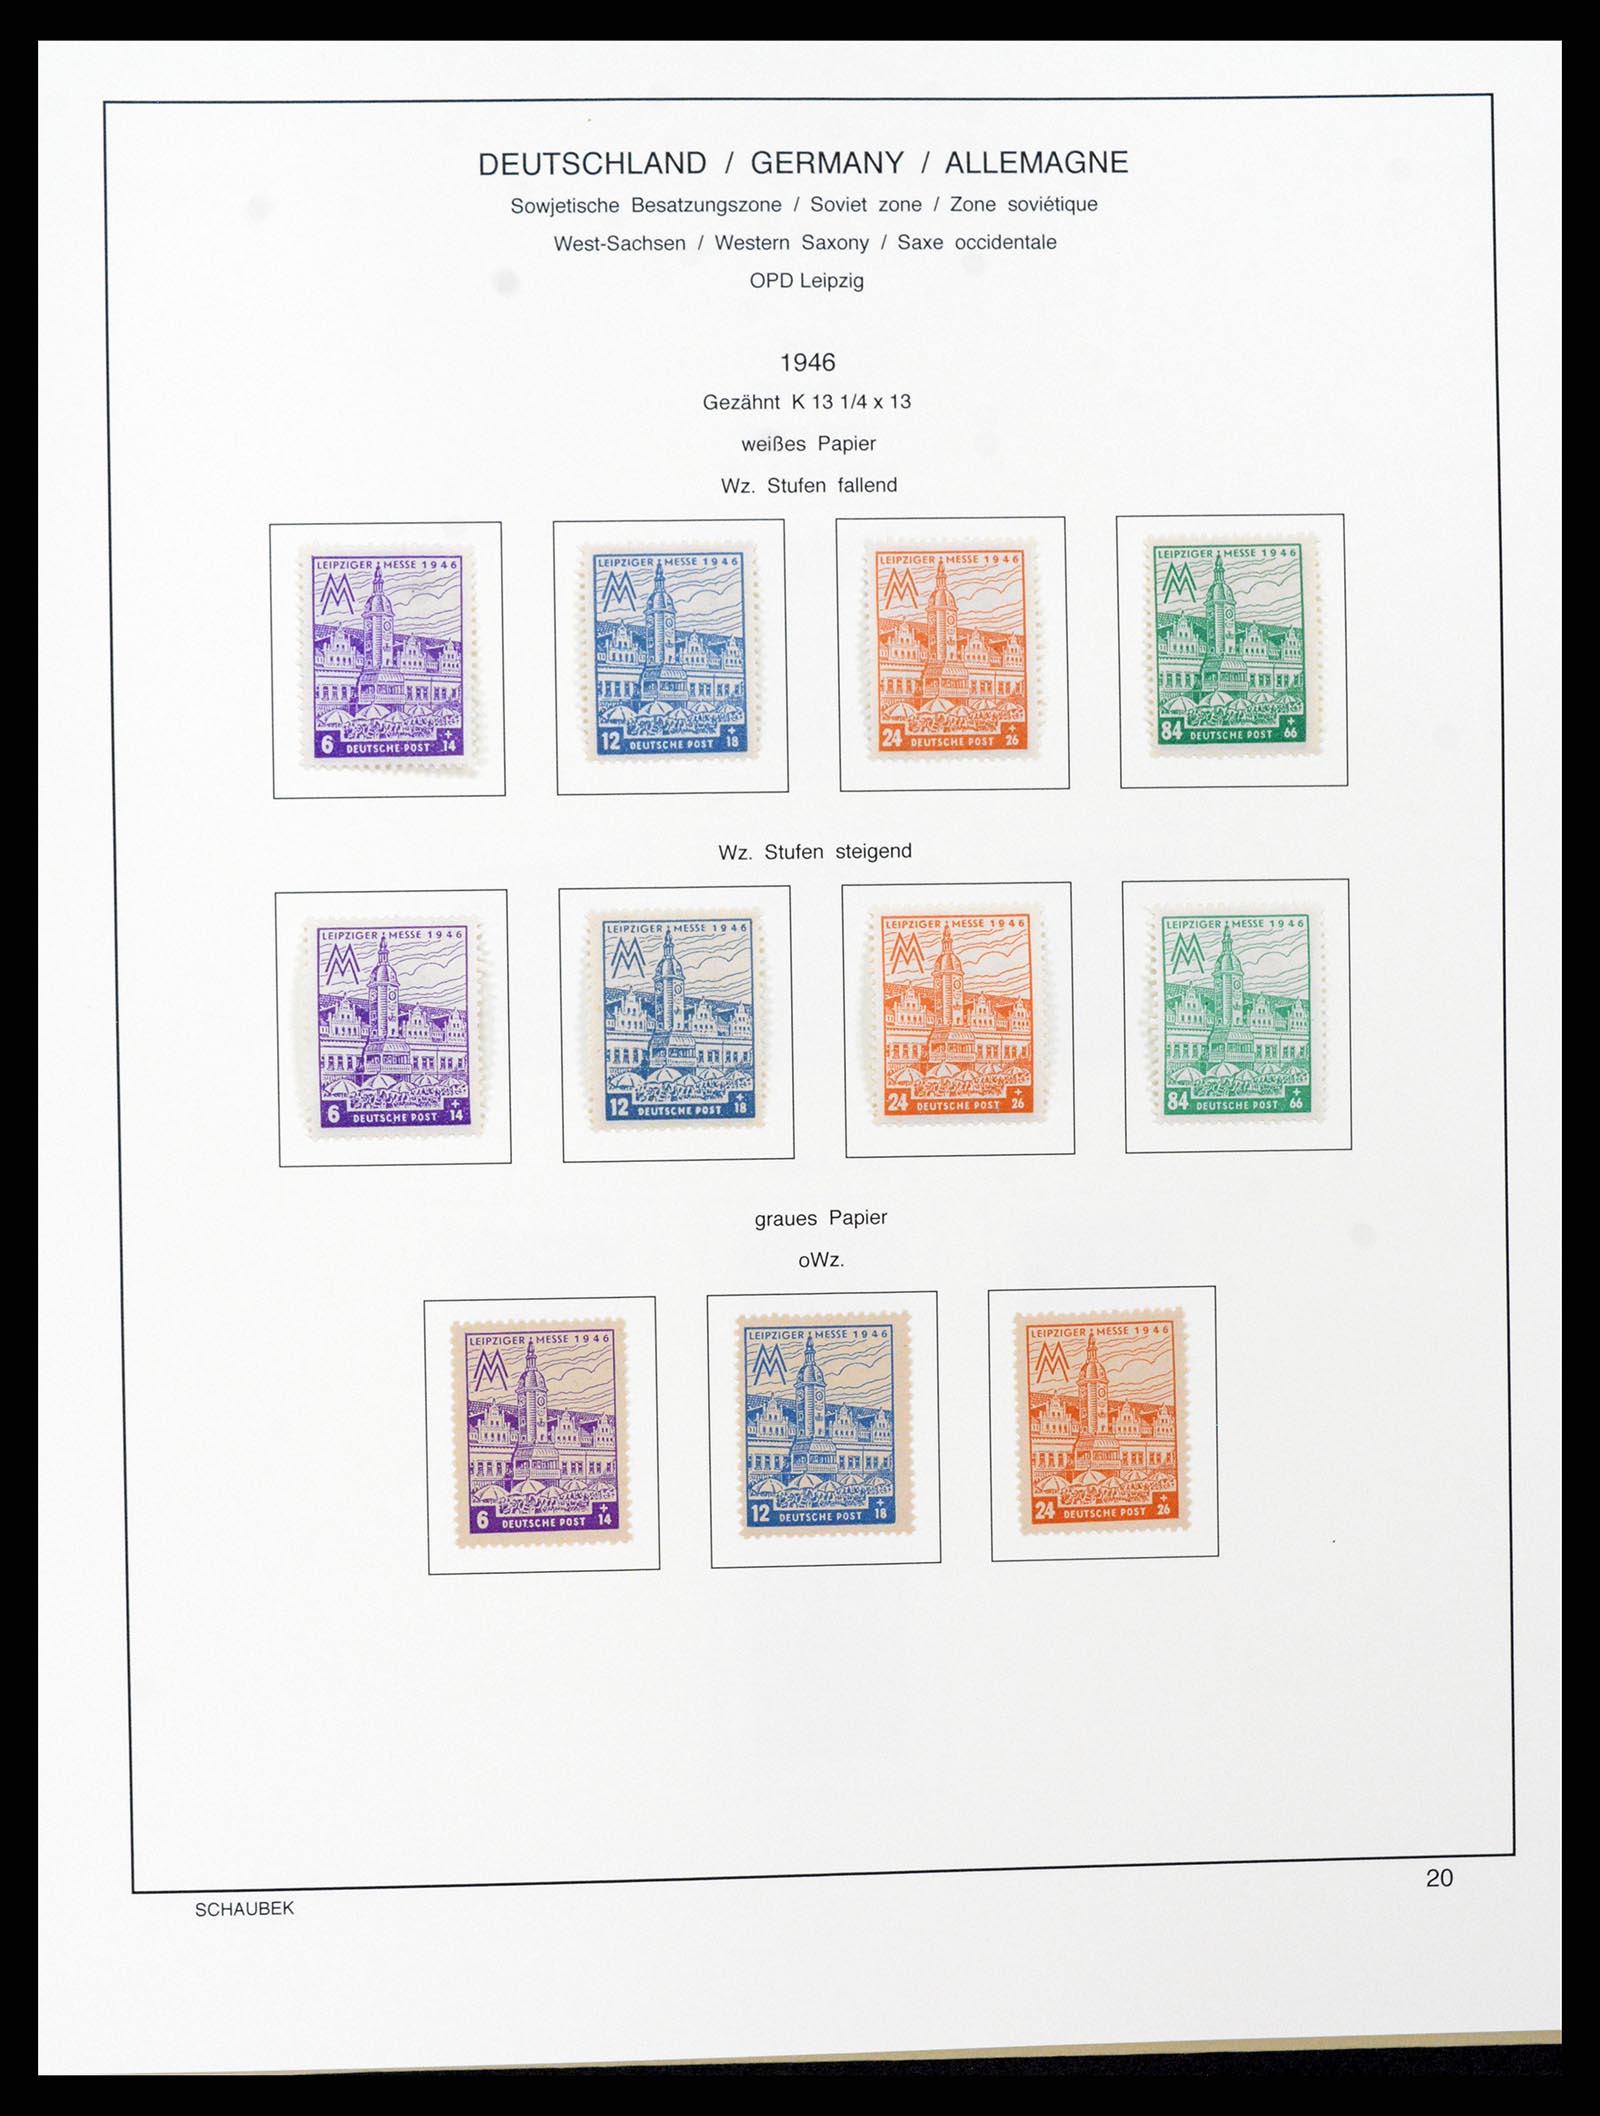 37645 044 - Stamp collection 37645 German Zones 1945-1949.